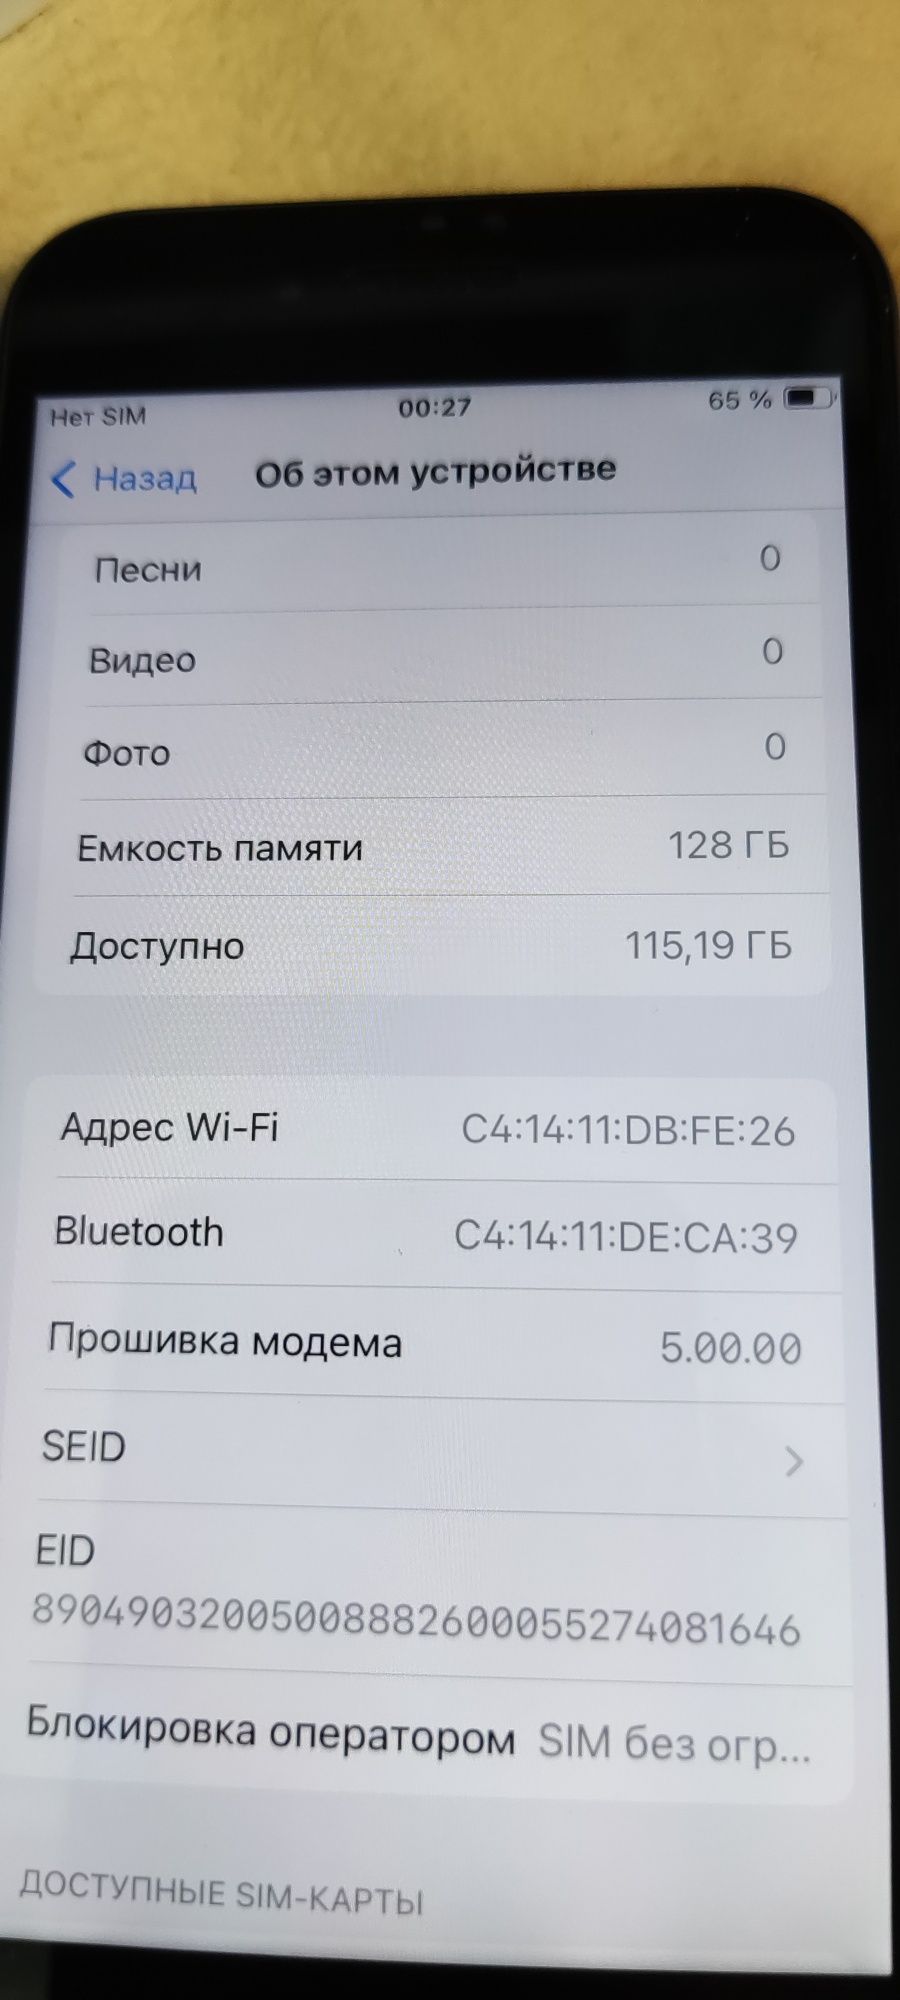 Apple iPhone SE 2020 128gb Black